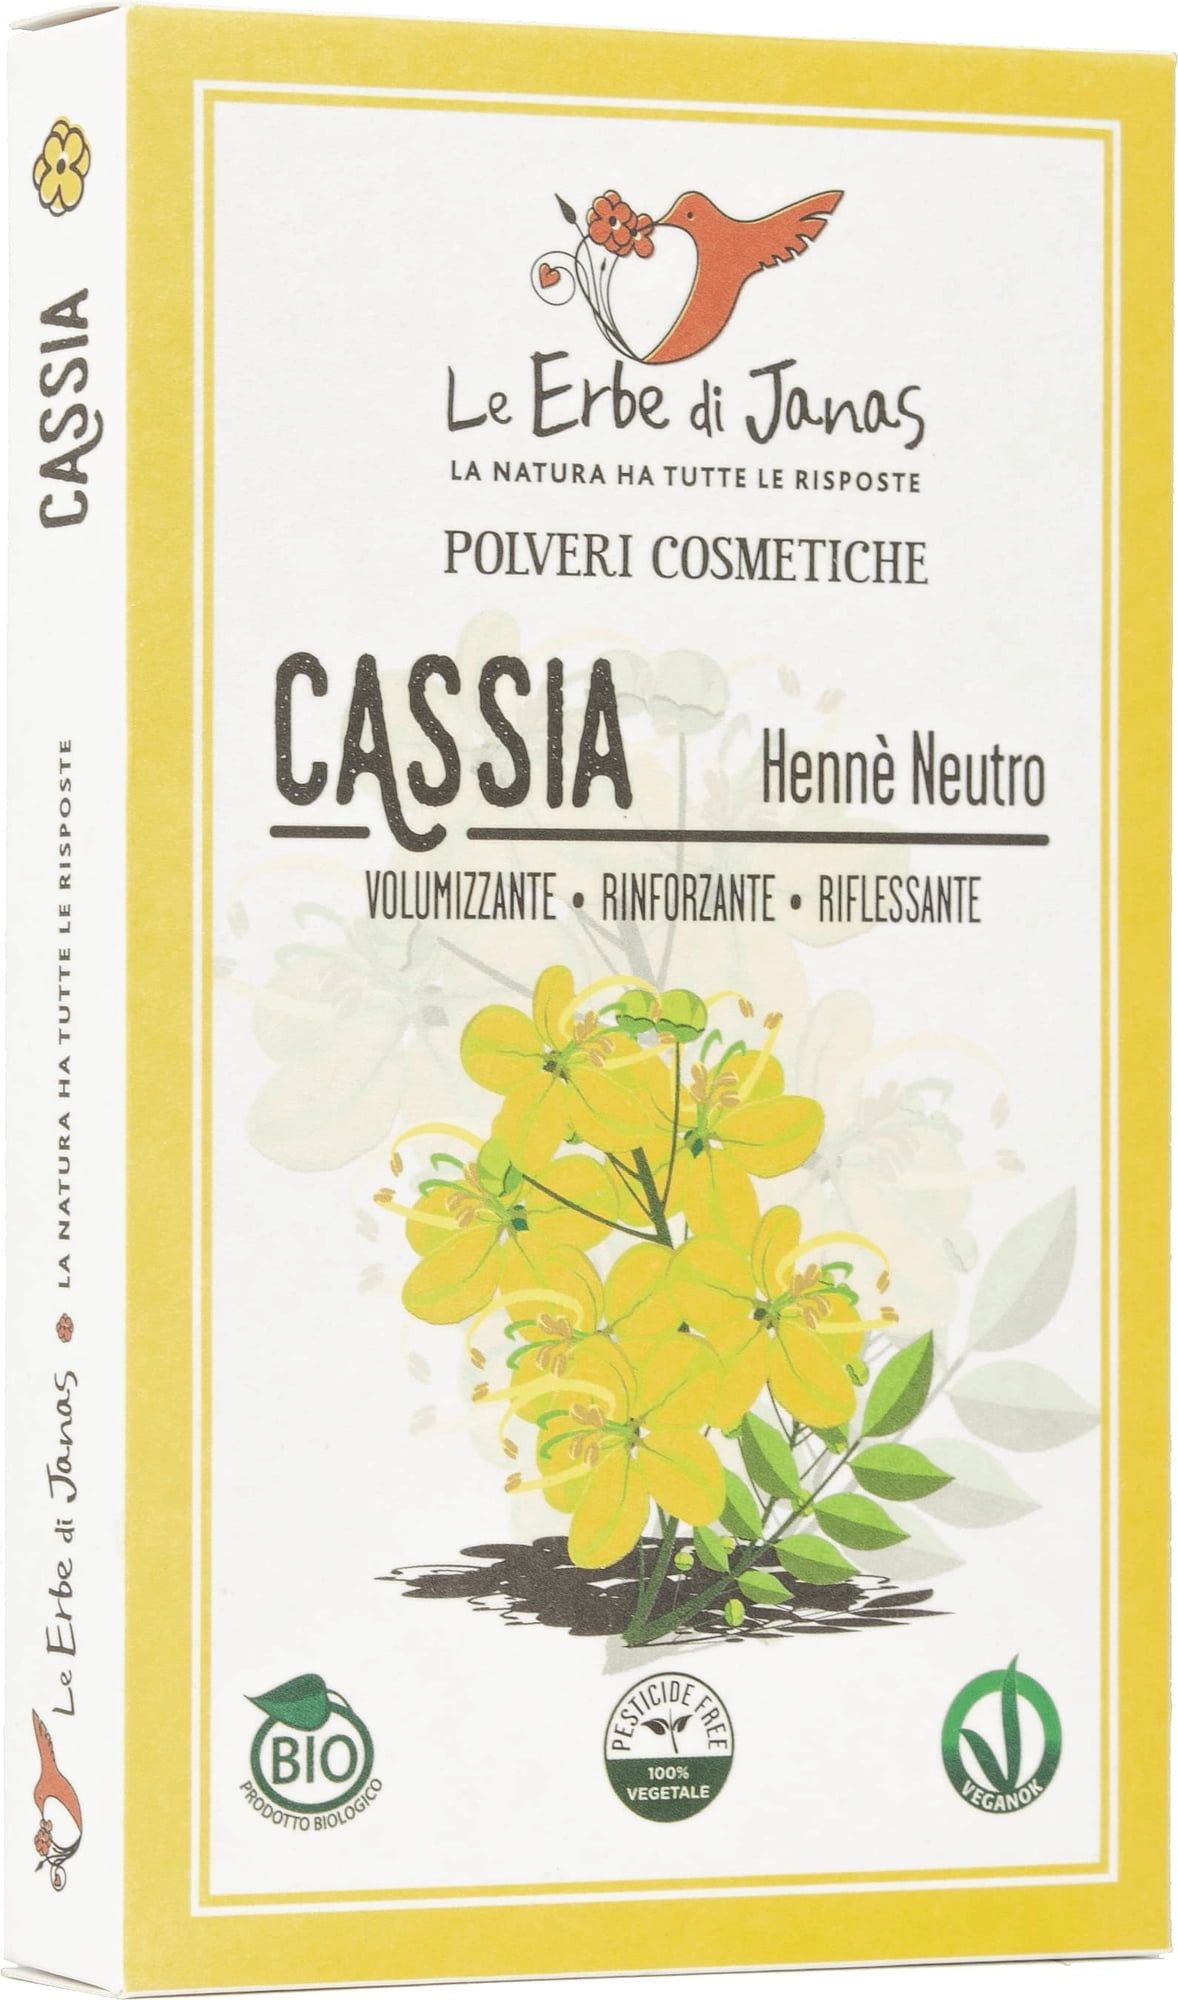 Le Erbe di Janas Cassia (Senna / Neutral Henna) - 100 g